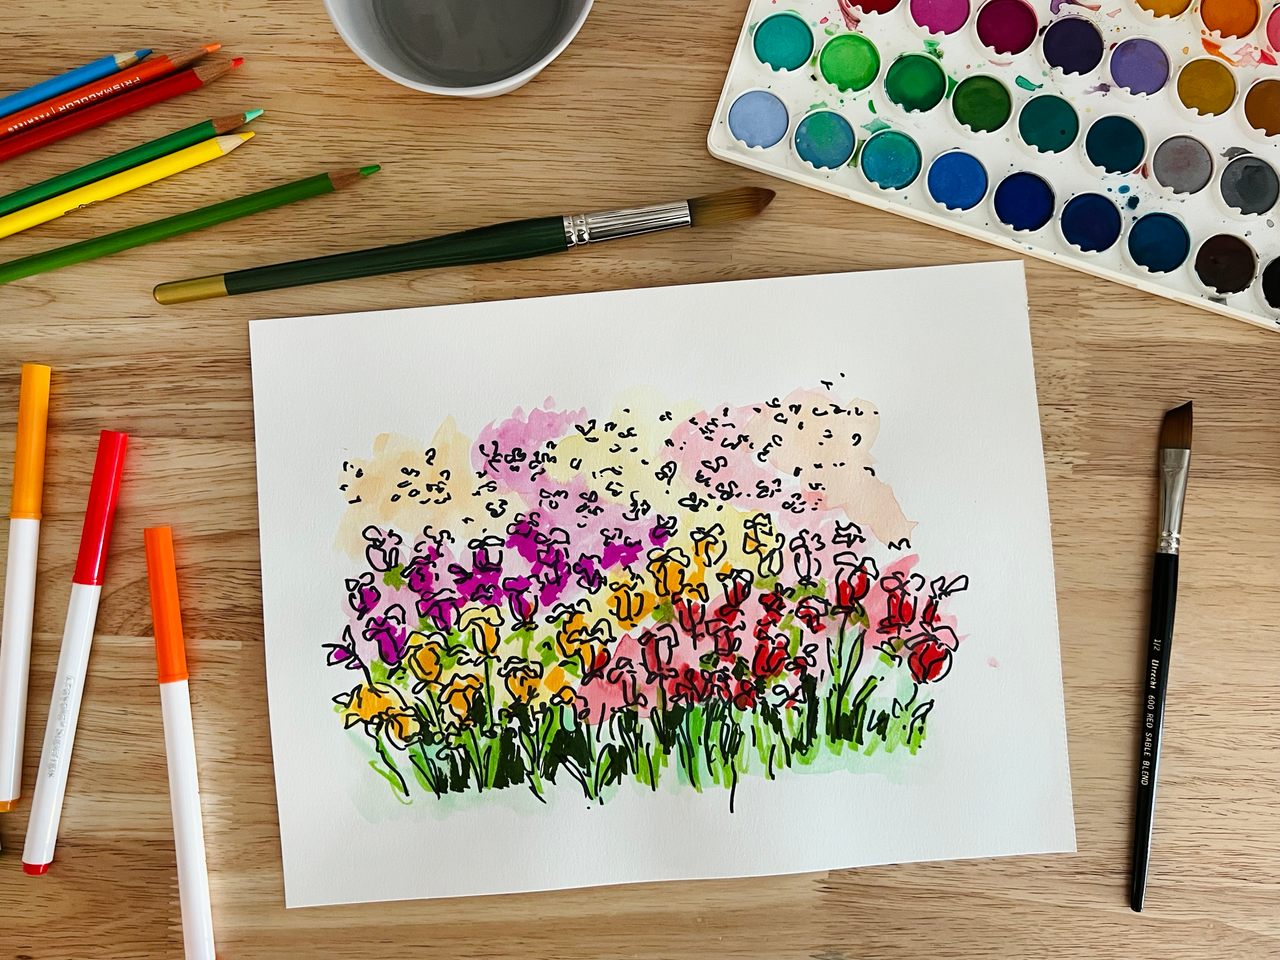 Original artwork depicting the The Flower Fields in Carlsbad, CA.  